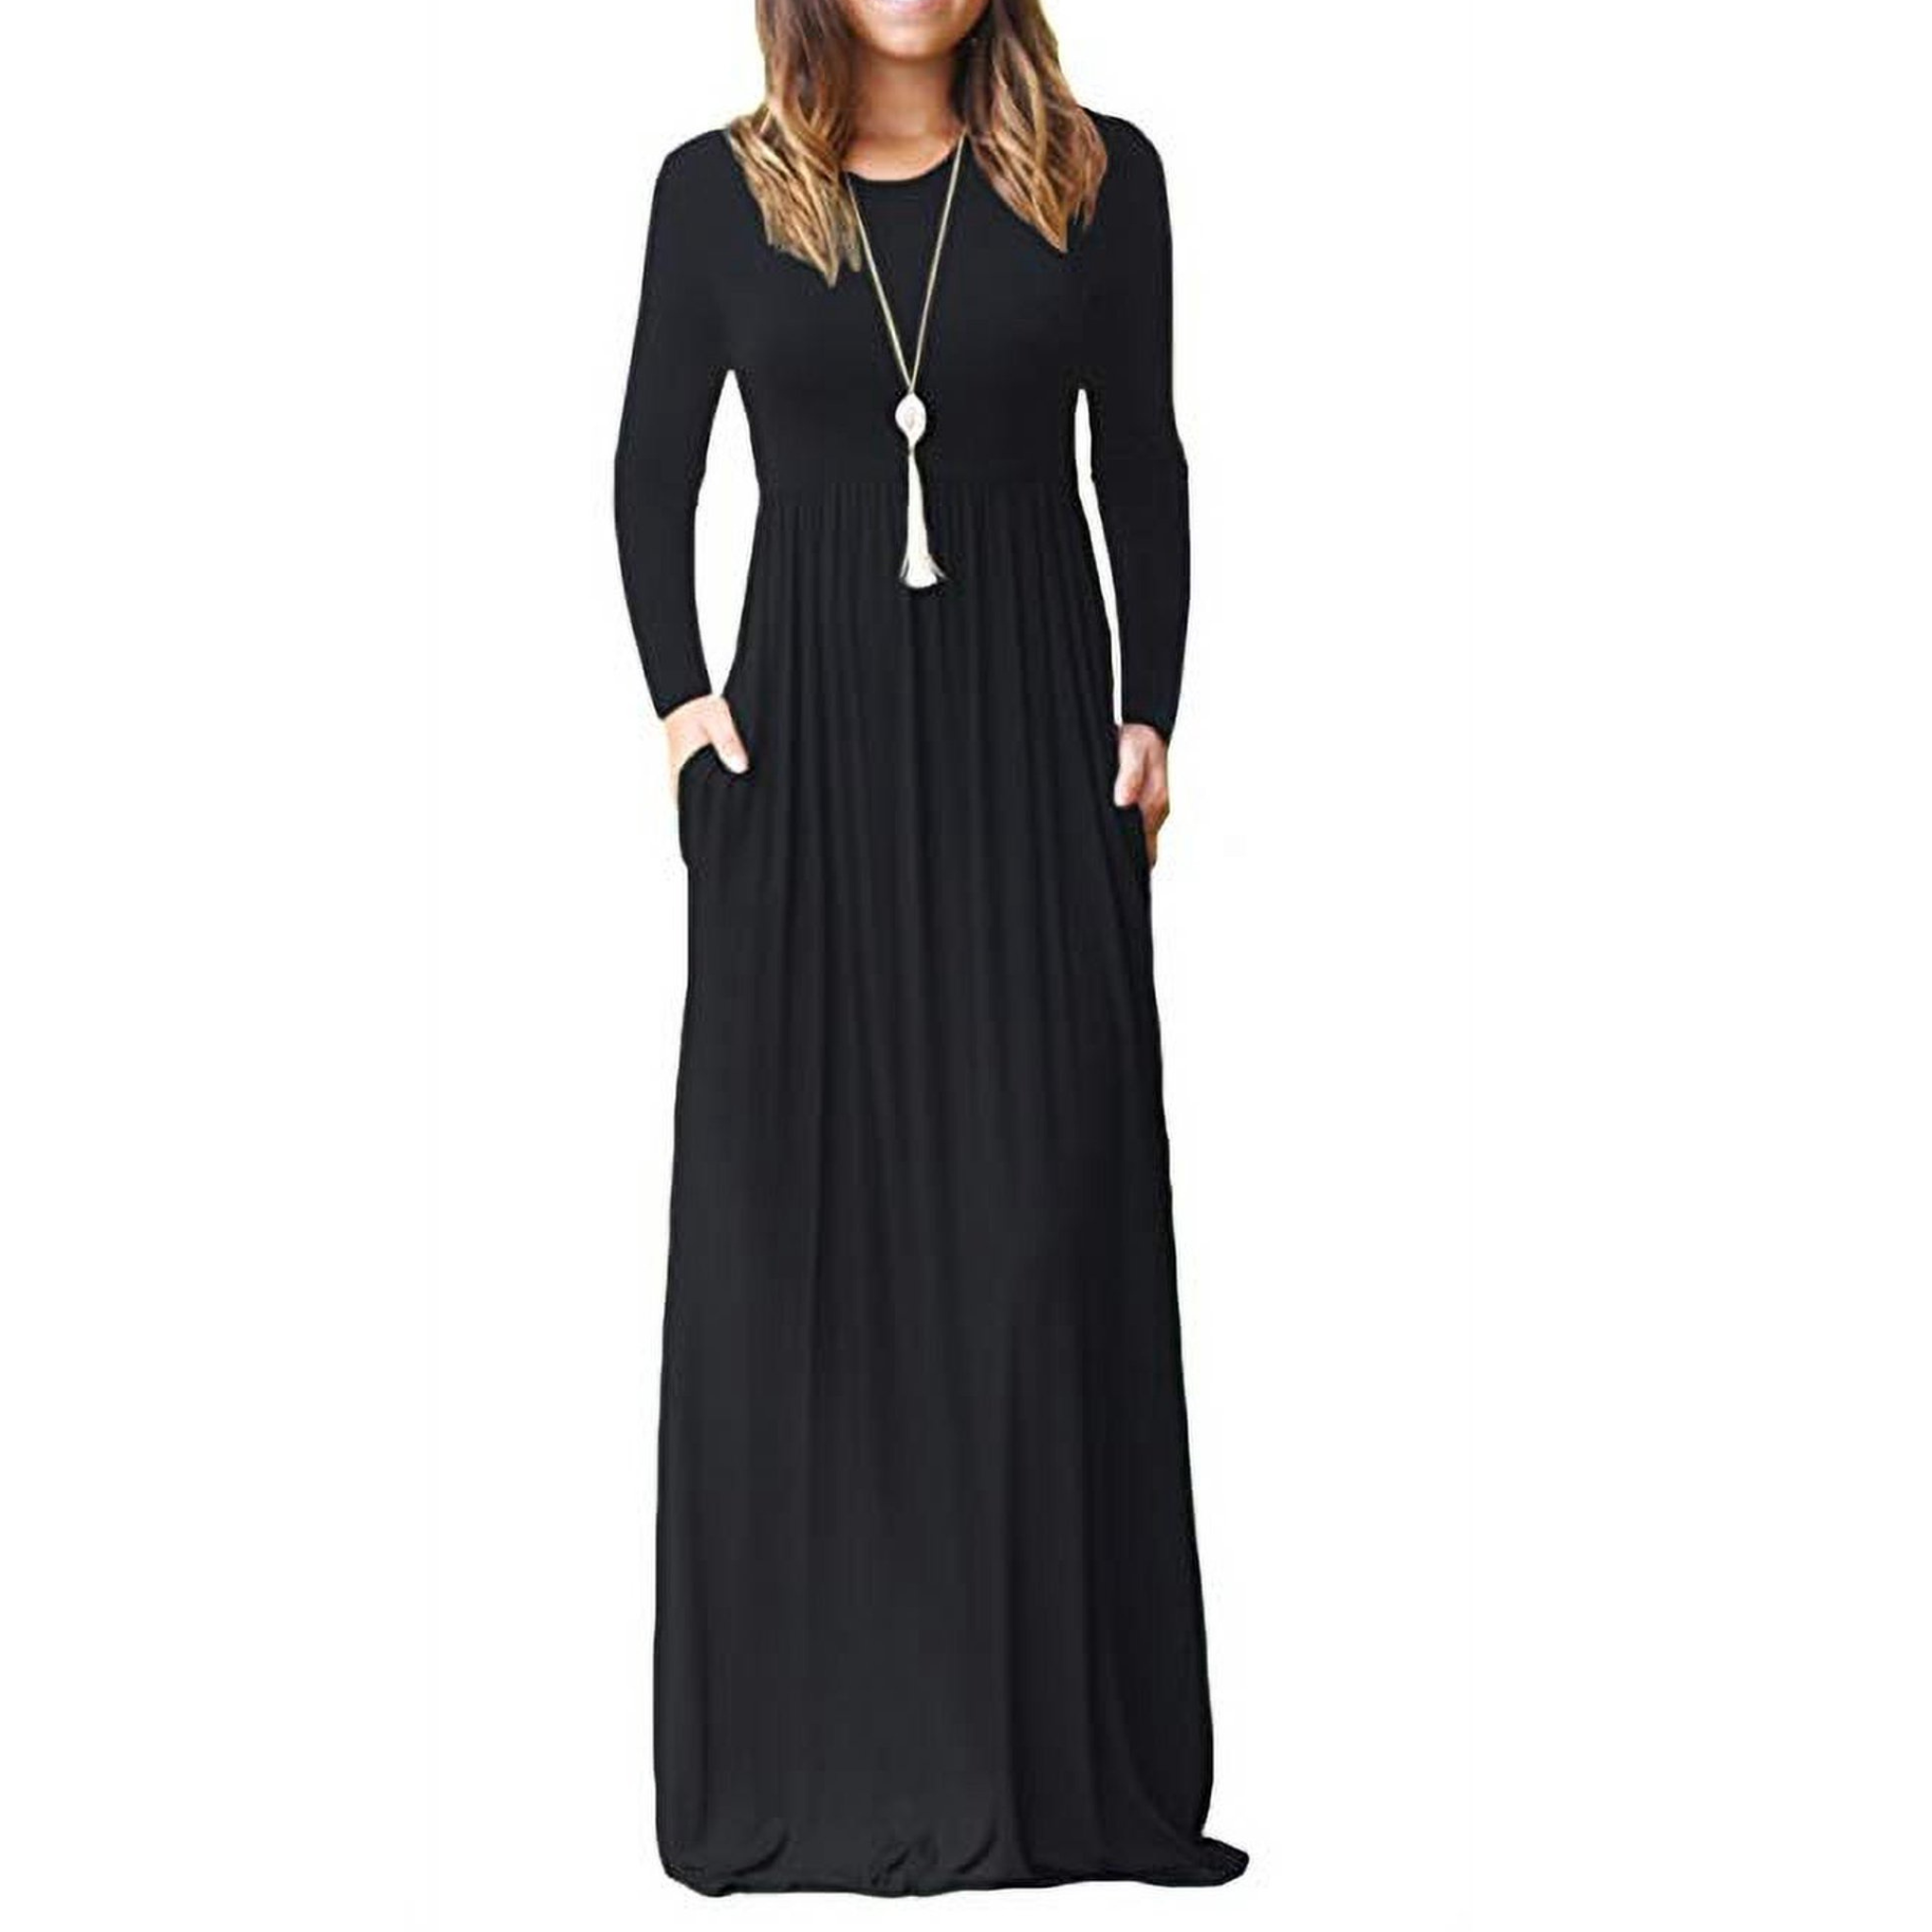 Walmart Long Sleeve Maxi Dress (9 COLORS)